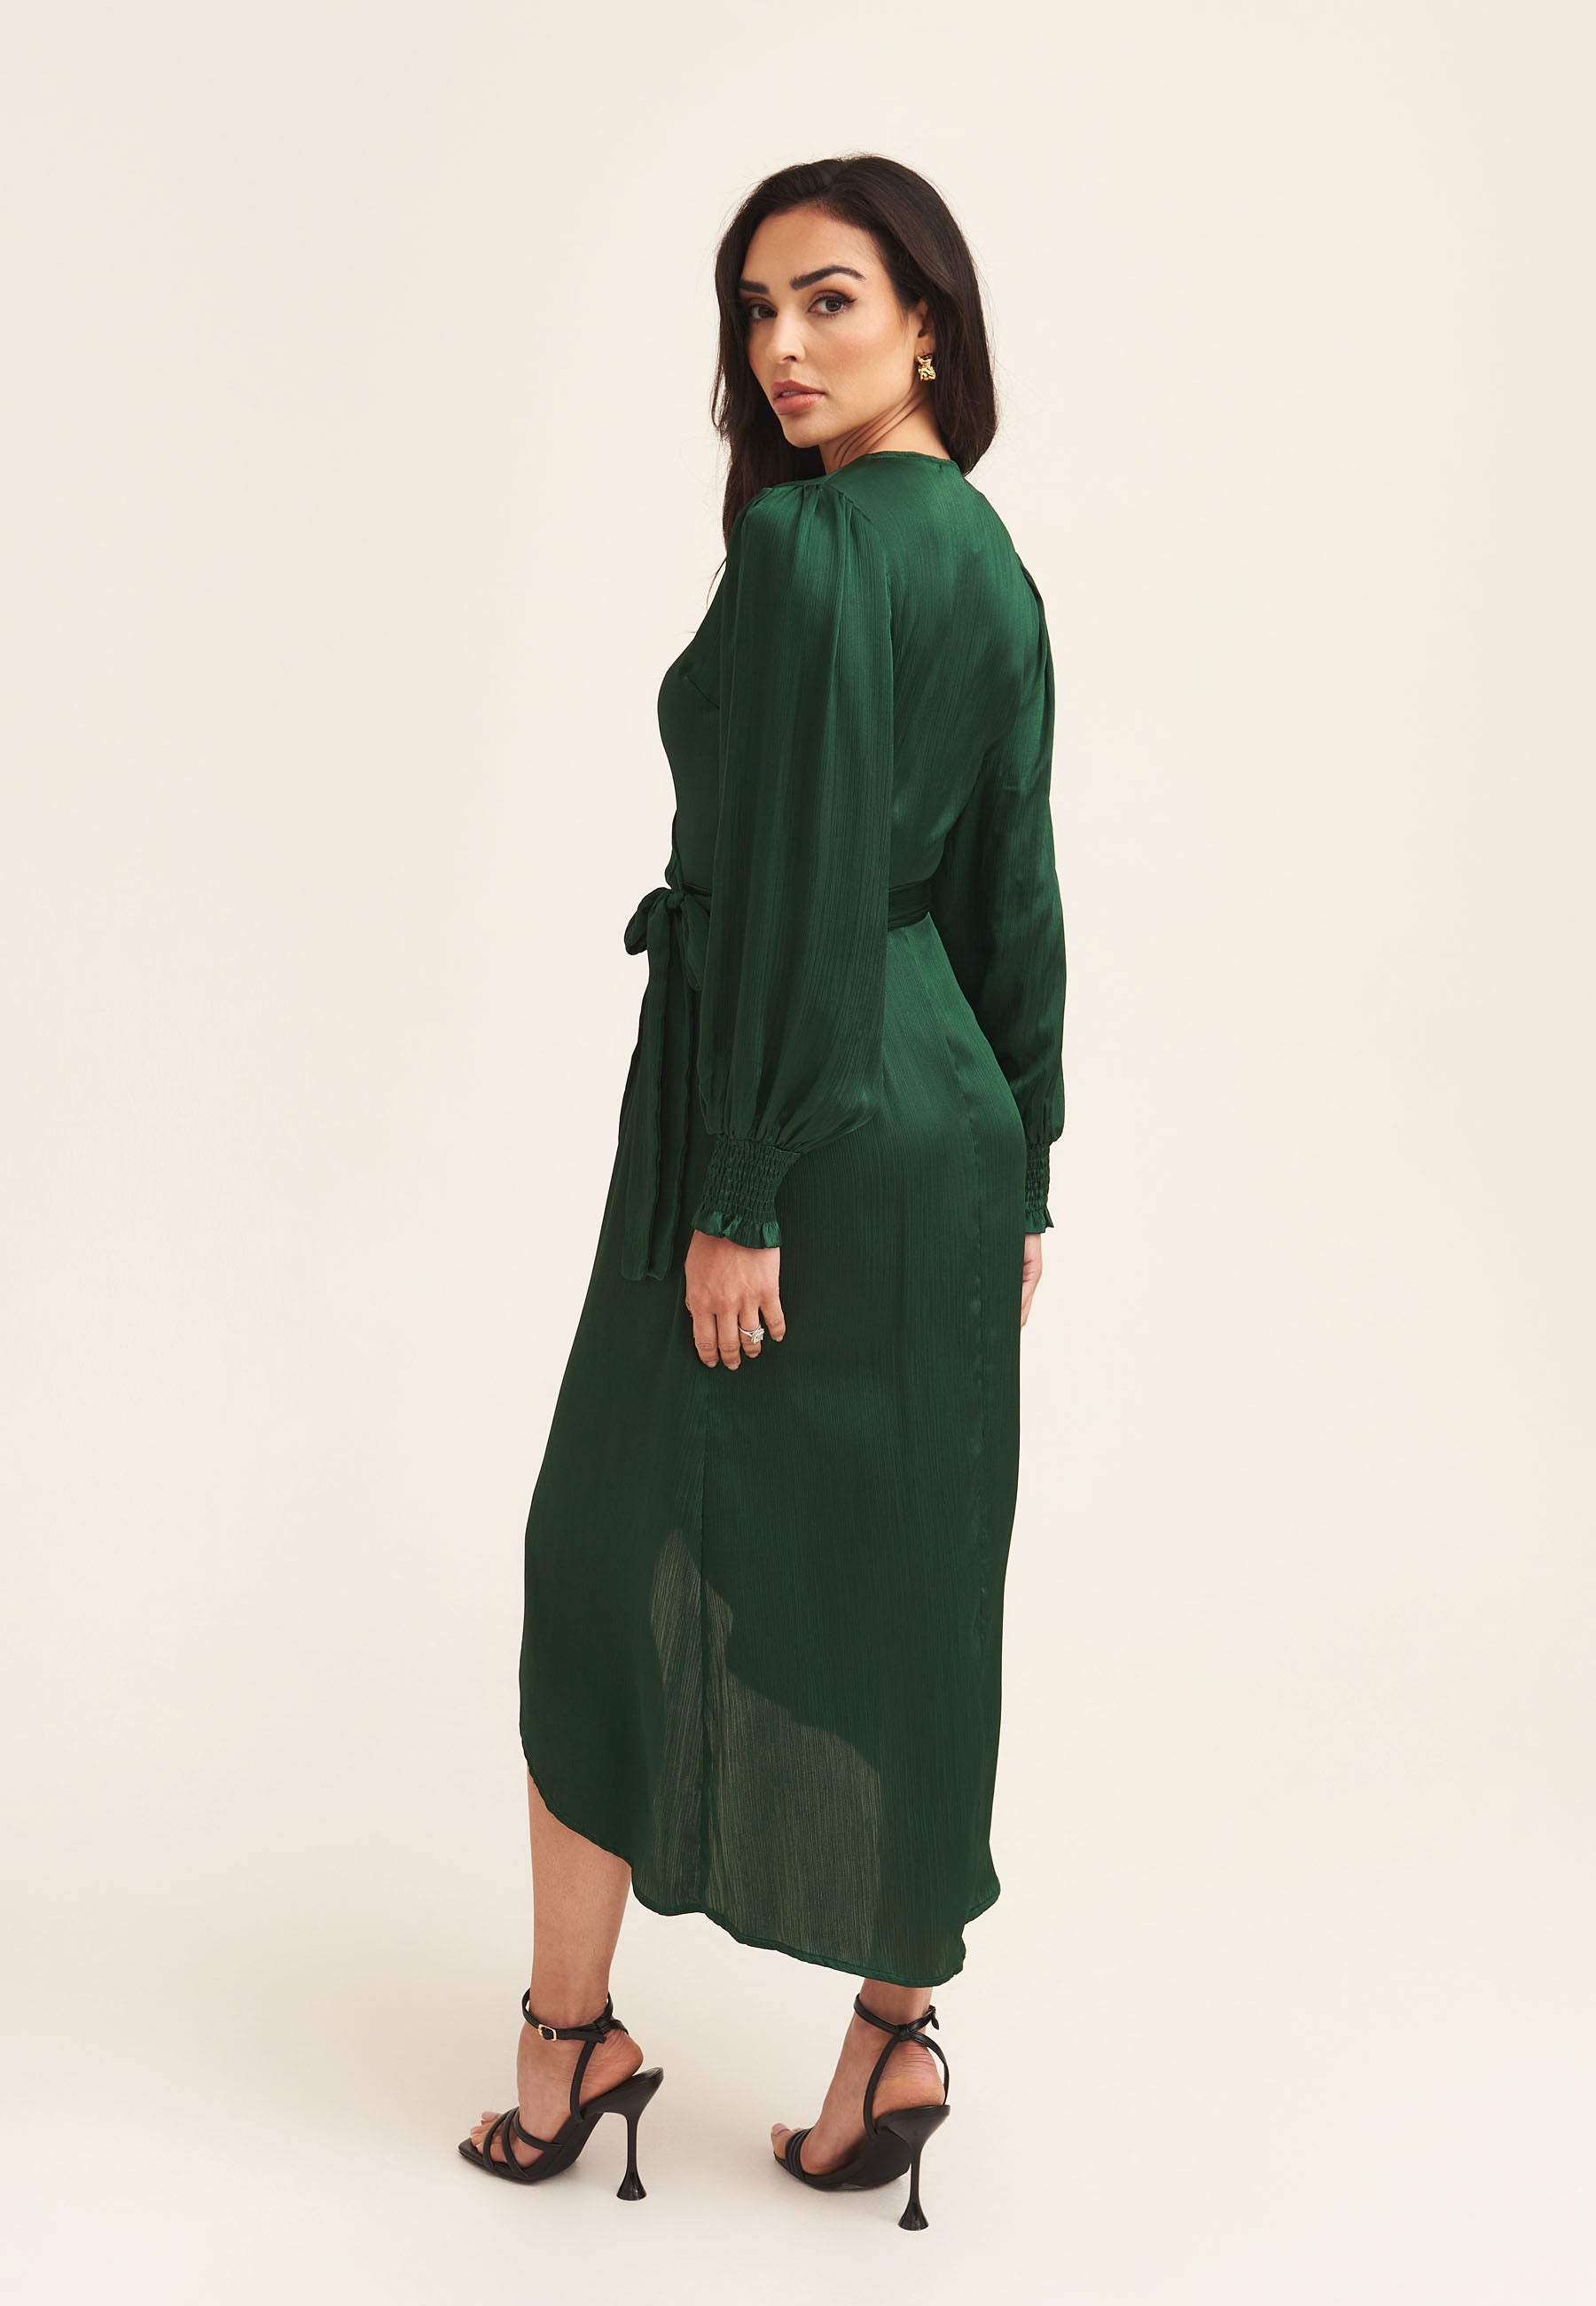 Green Satin Wrap Midi Dress